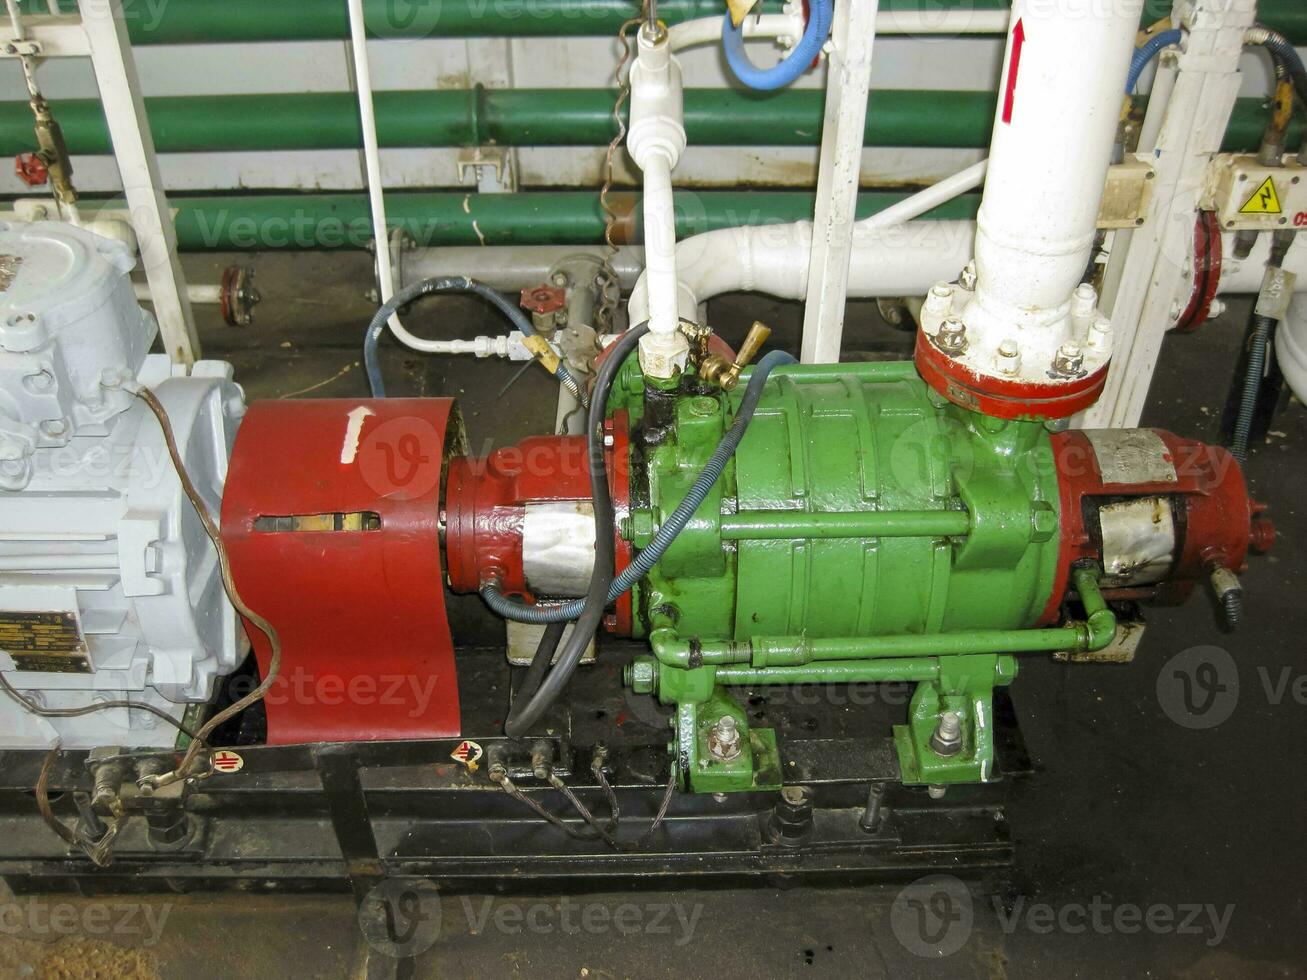 centrifugal olja pump. pumpning vatten behandling modul. olja equipm foto